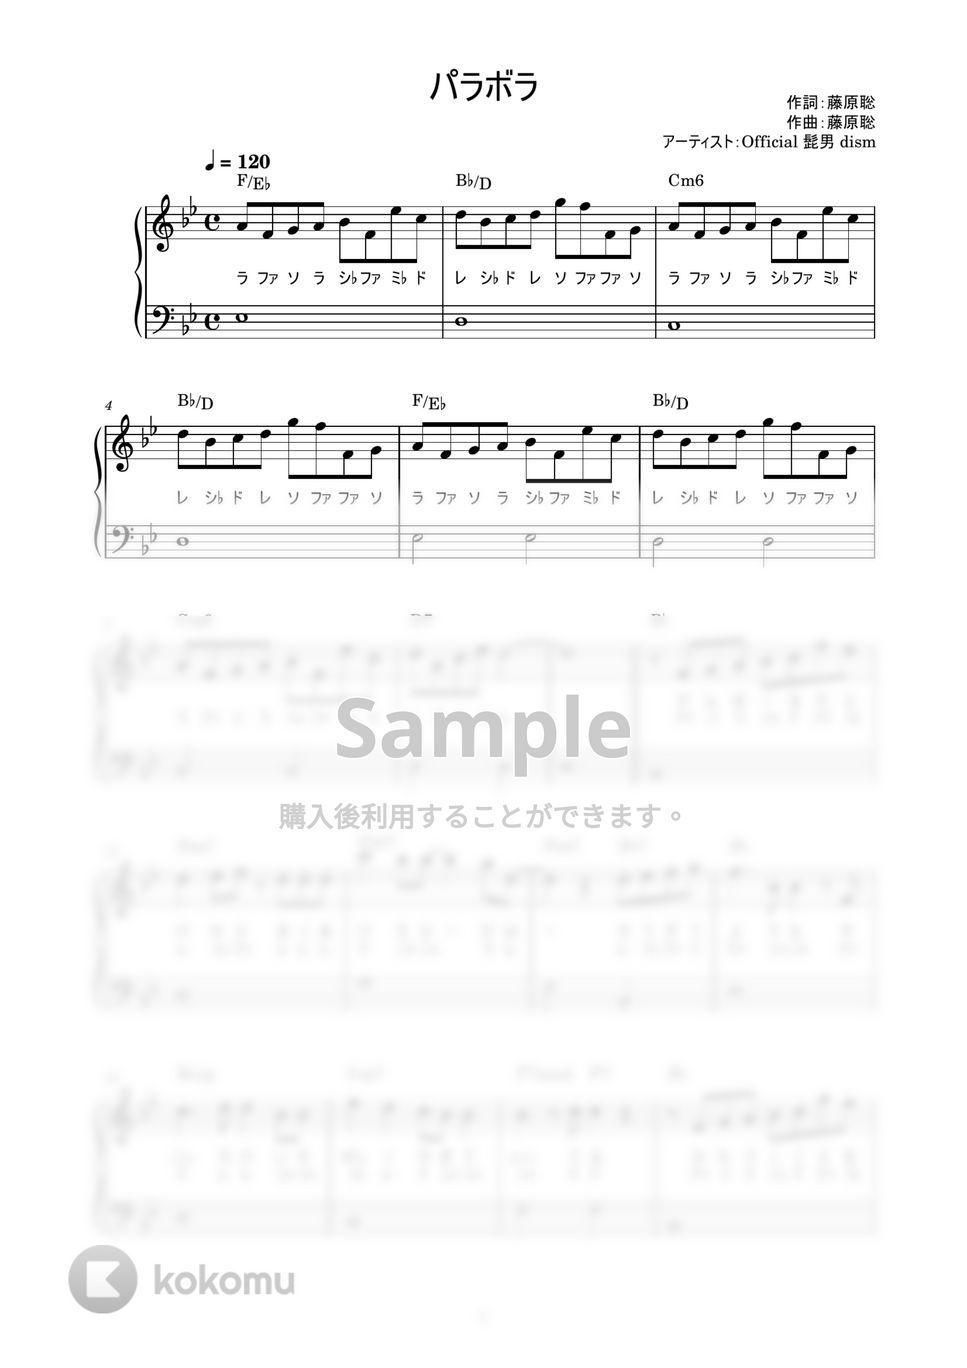 Official髭男dism - パラボラ (かんたん / 歌詞付き / ドレミ付き / 初心者) by piano.tokyo